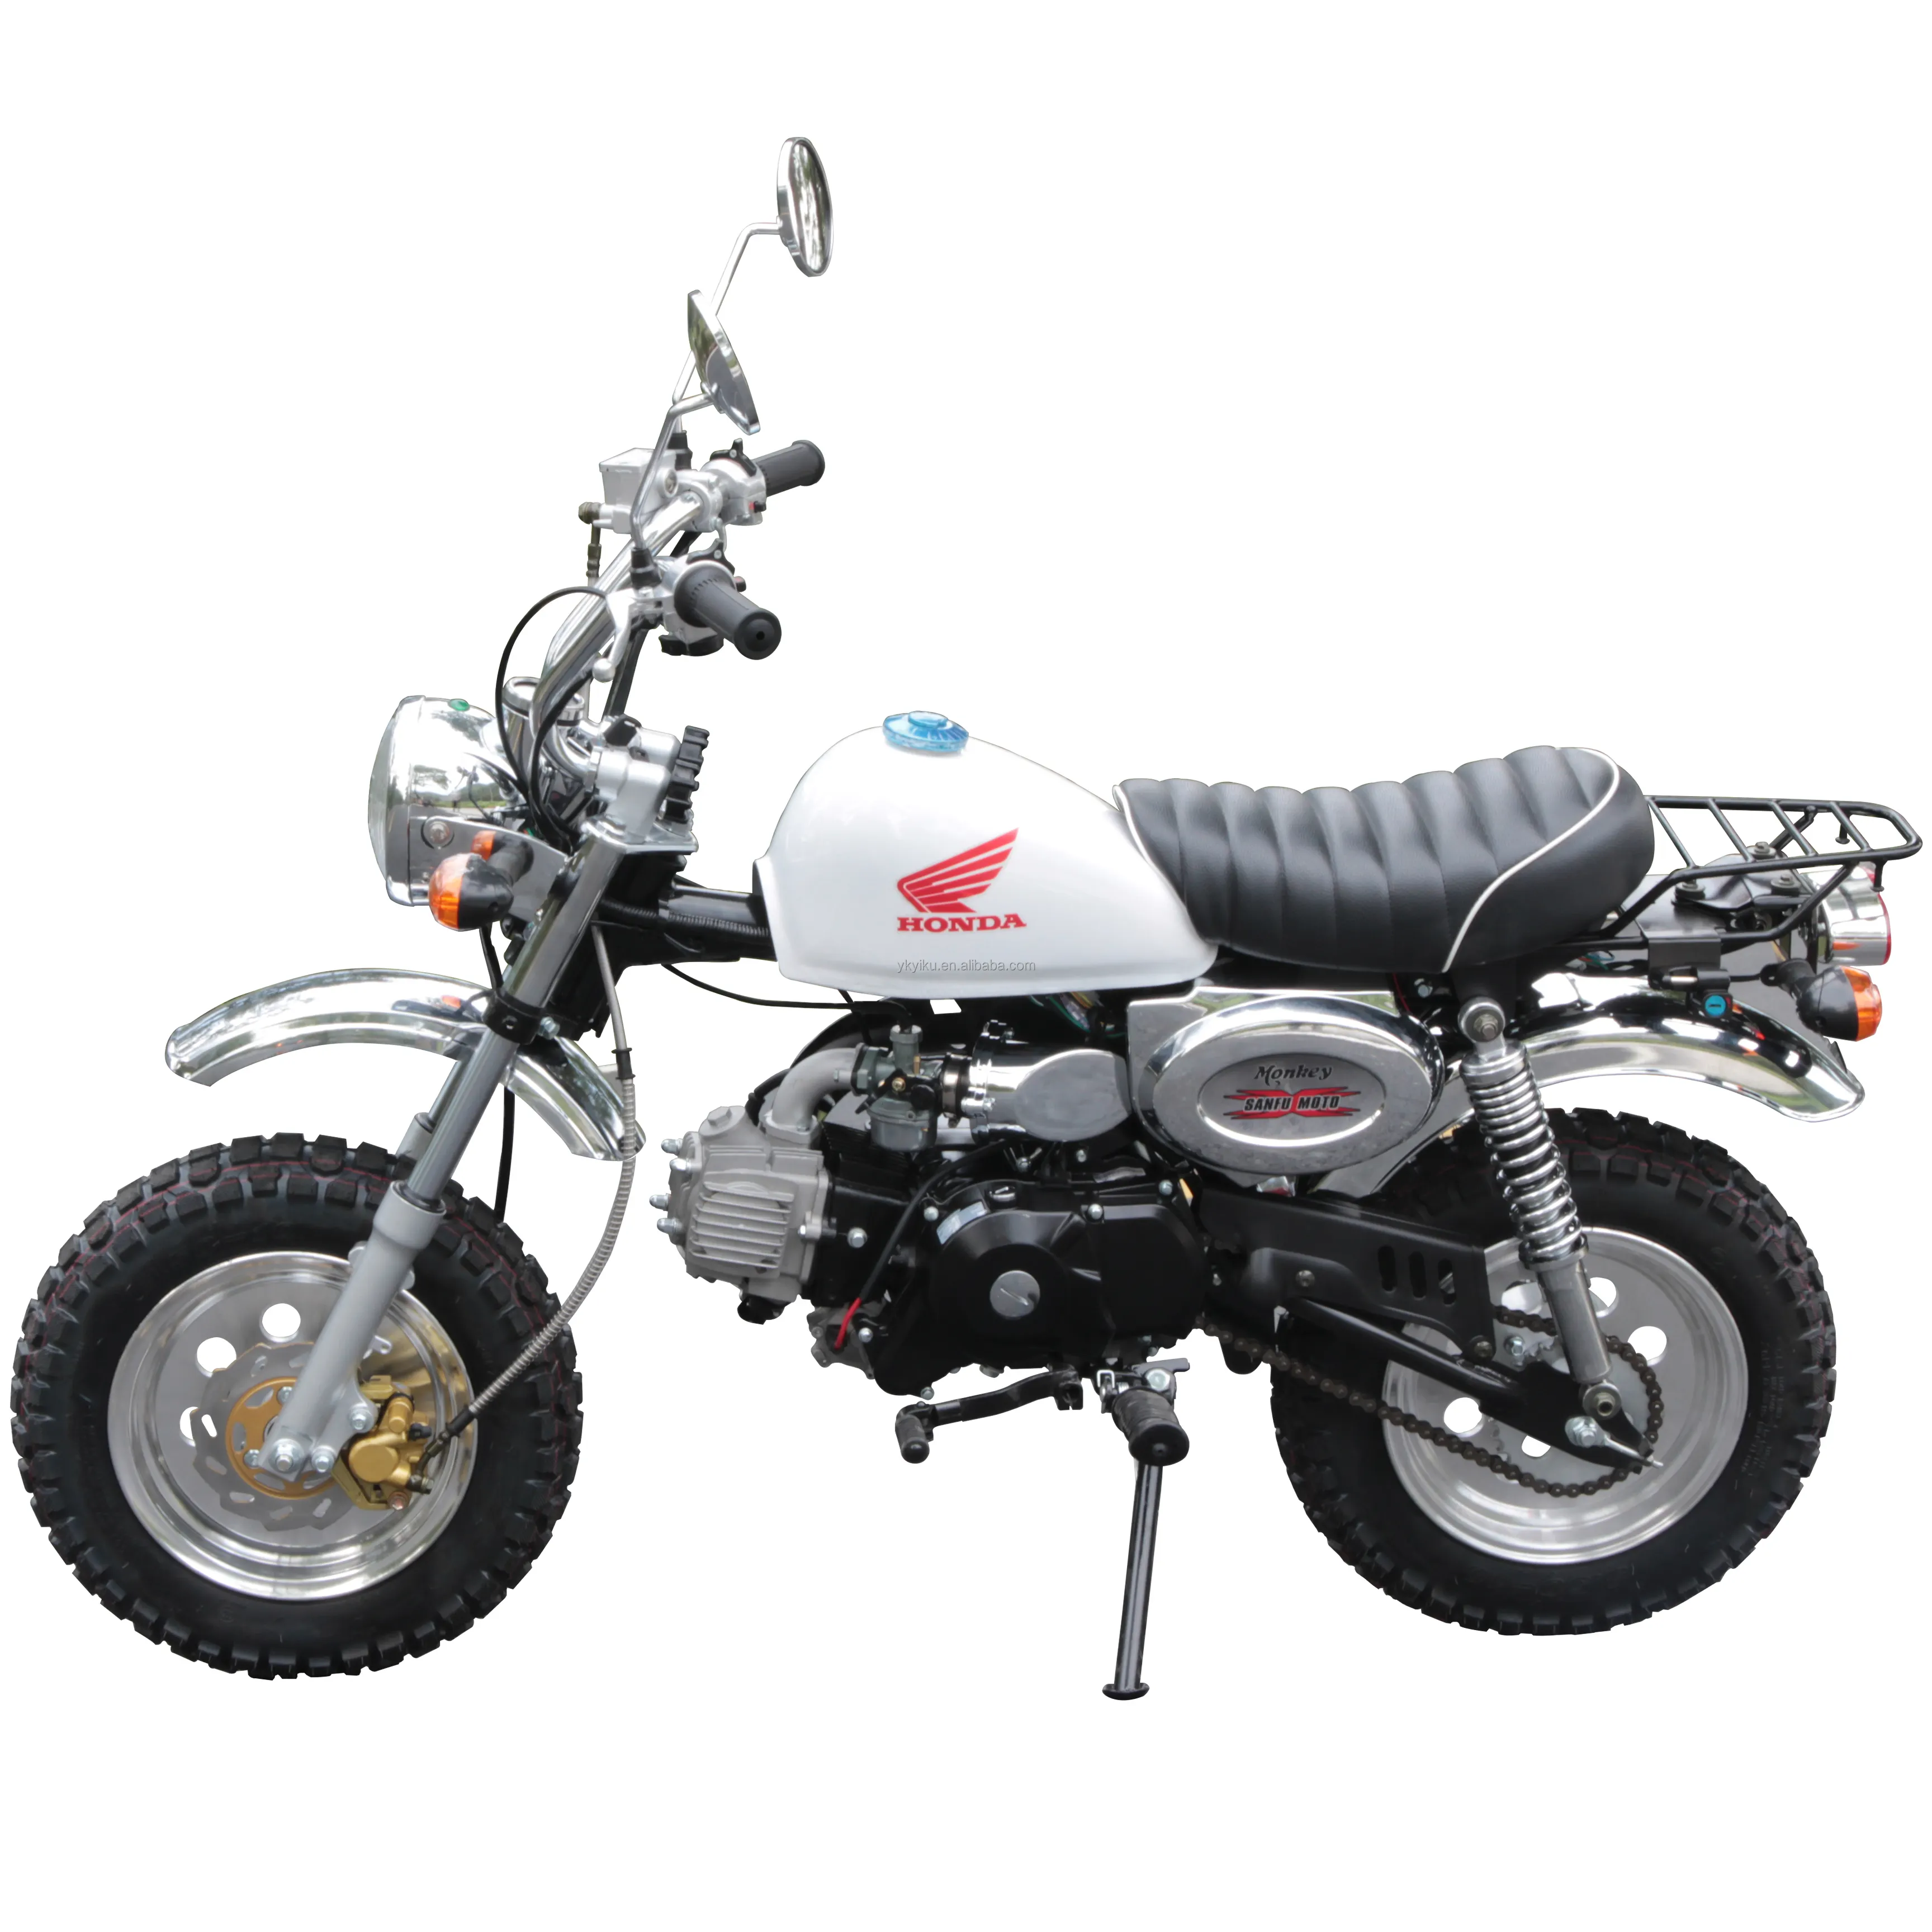 Hot Sell 125ccm Monkey Bike und 125CC Motorrad Luftkühlung Motor Monkey Motorrad Off Road Dirt Bikes